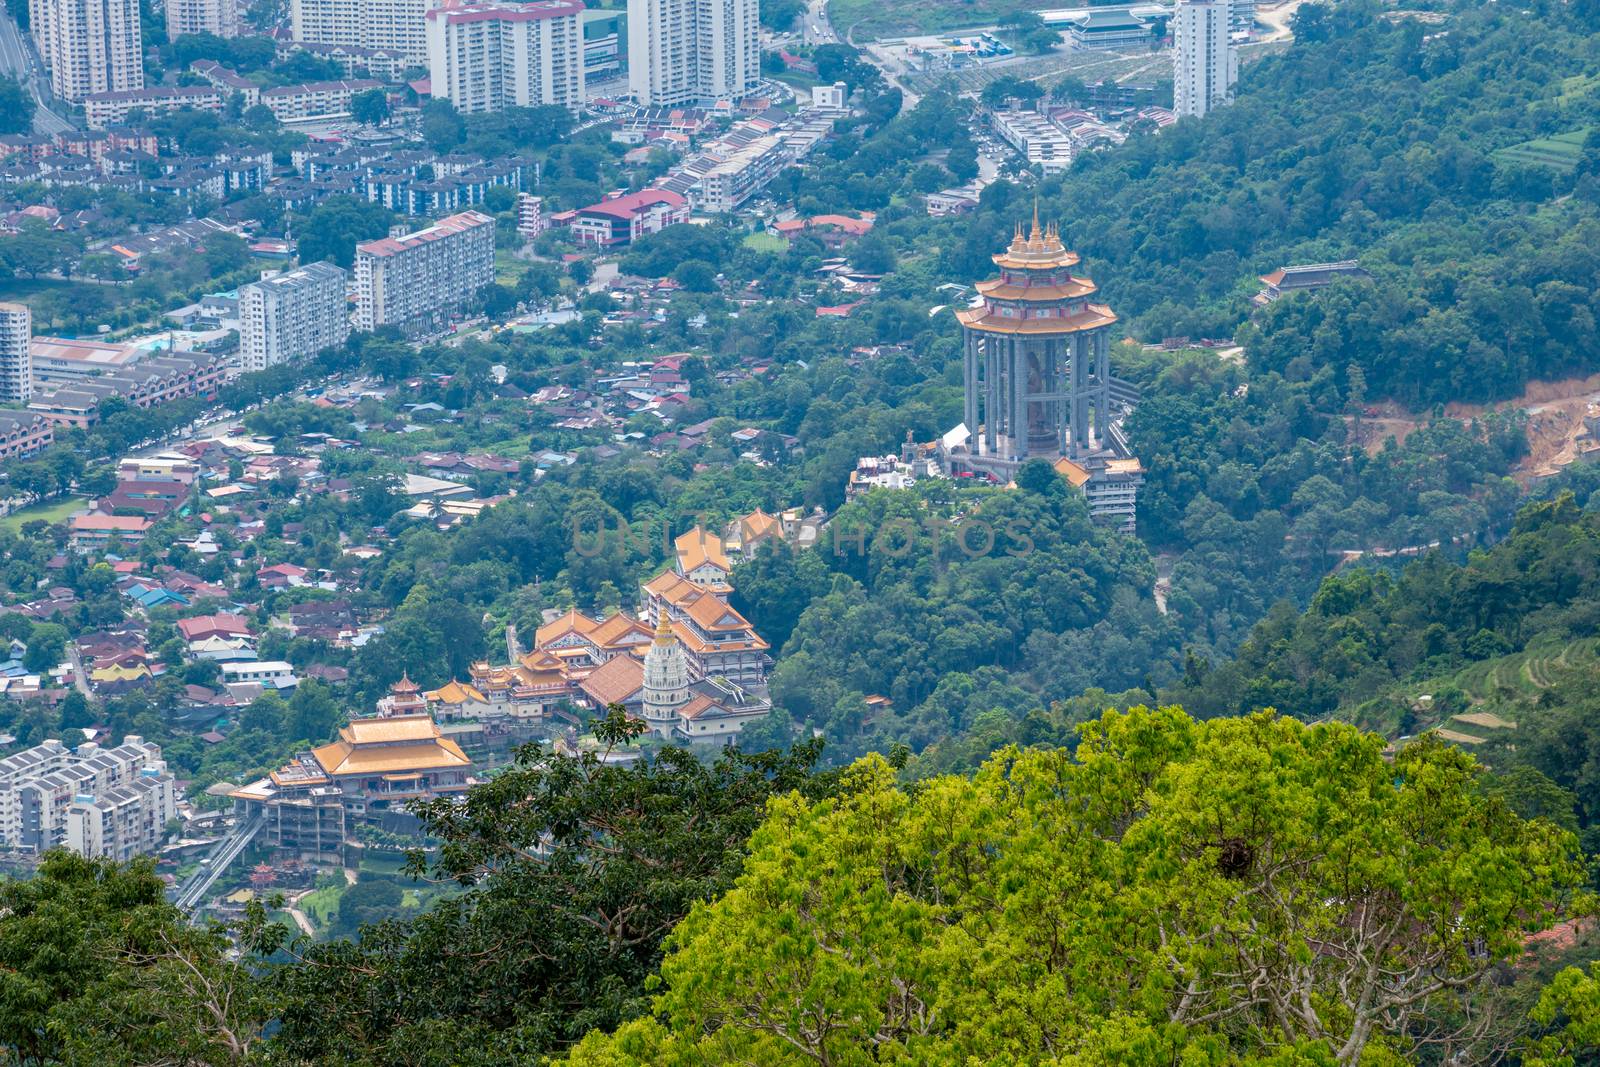 Kek Lok Temple seen from Penang Hill